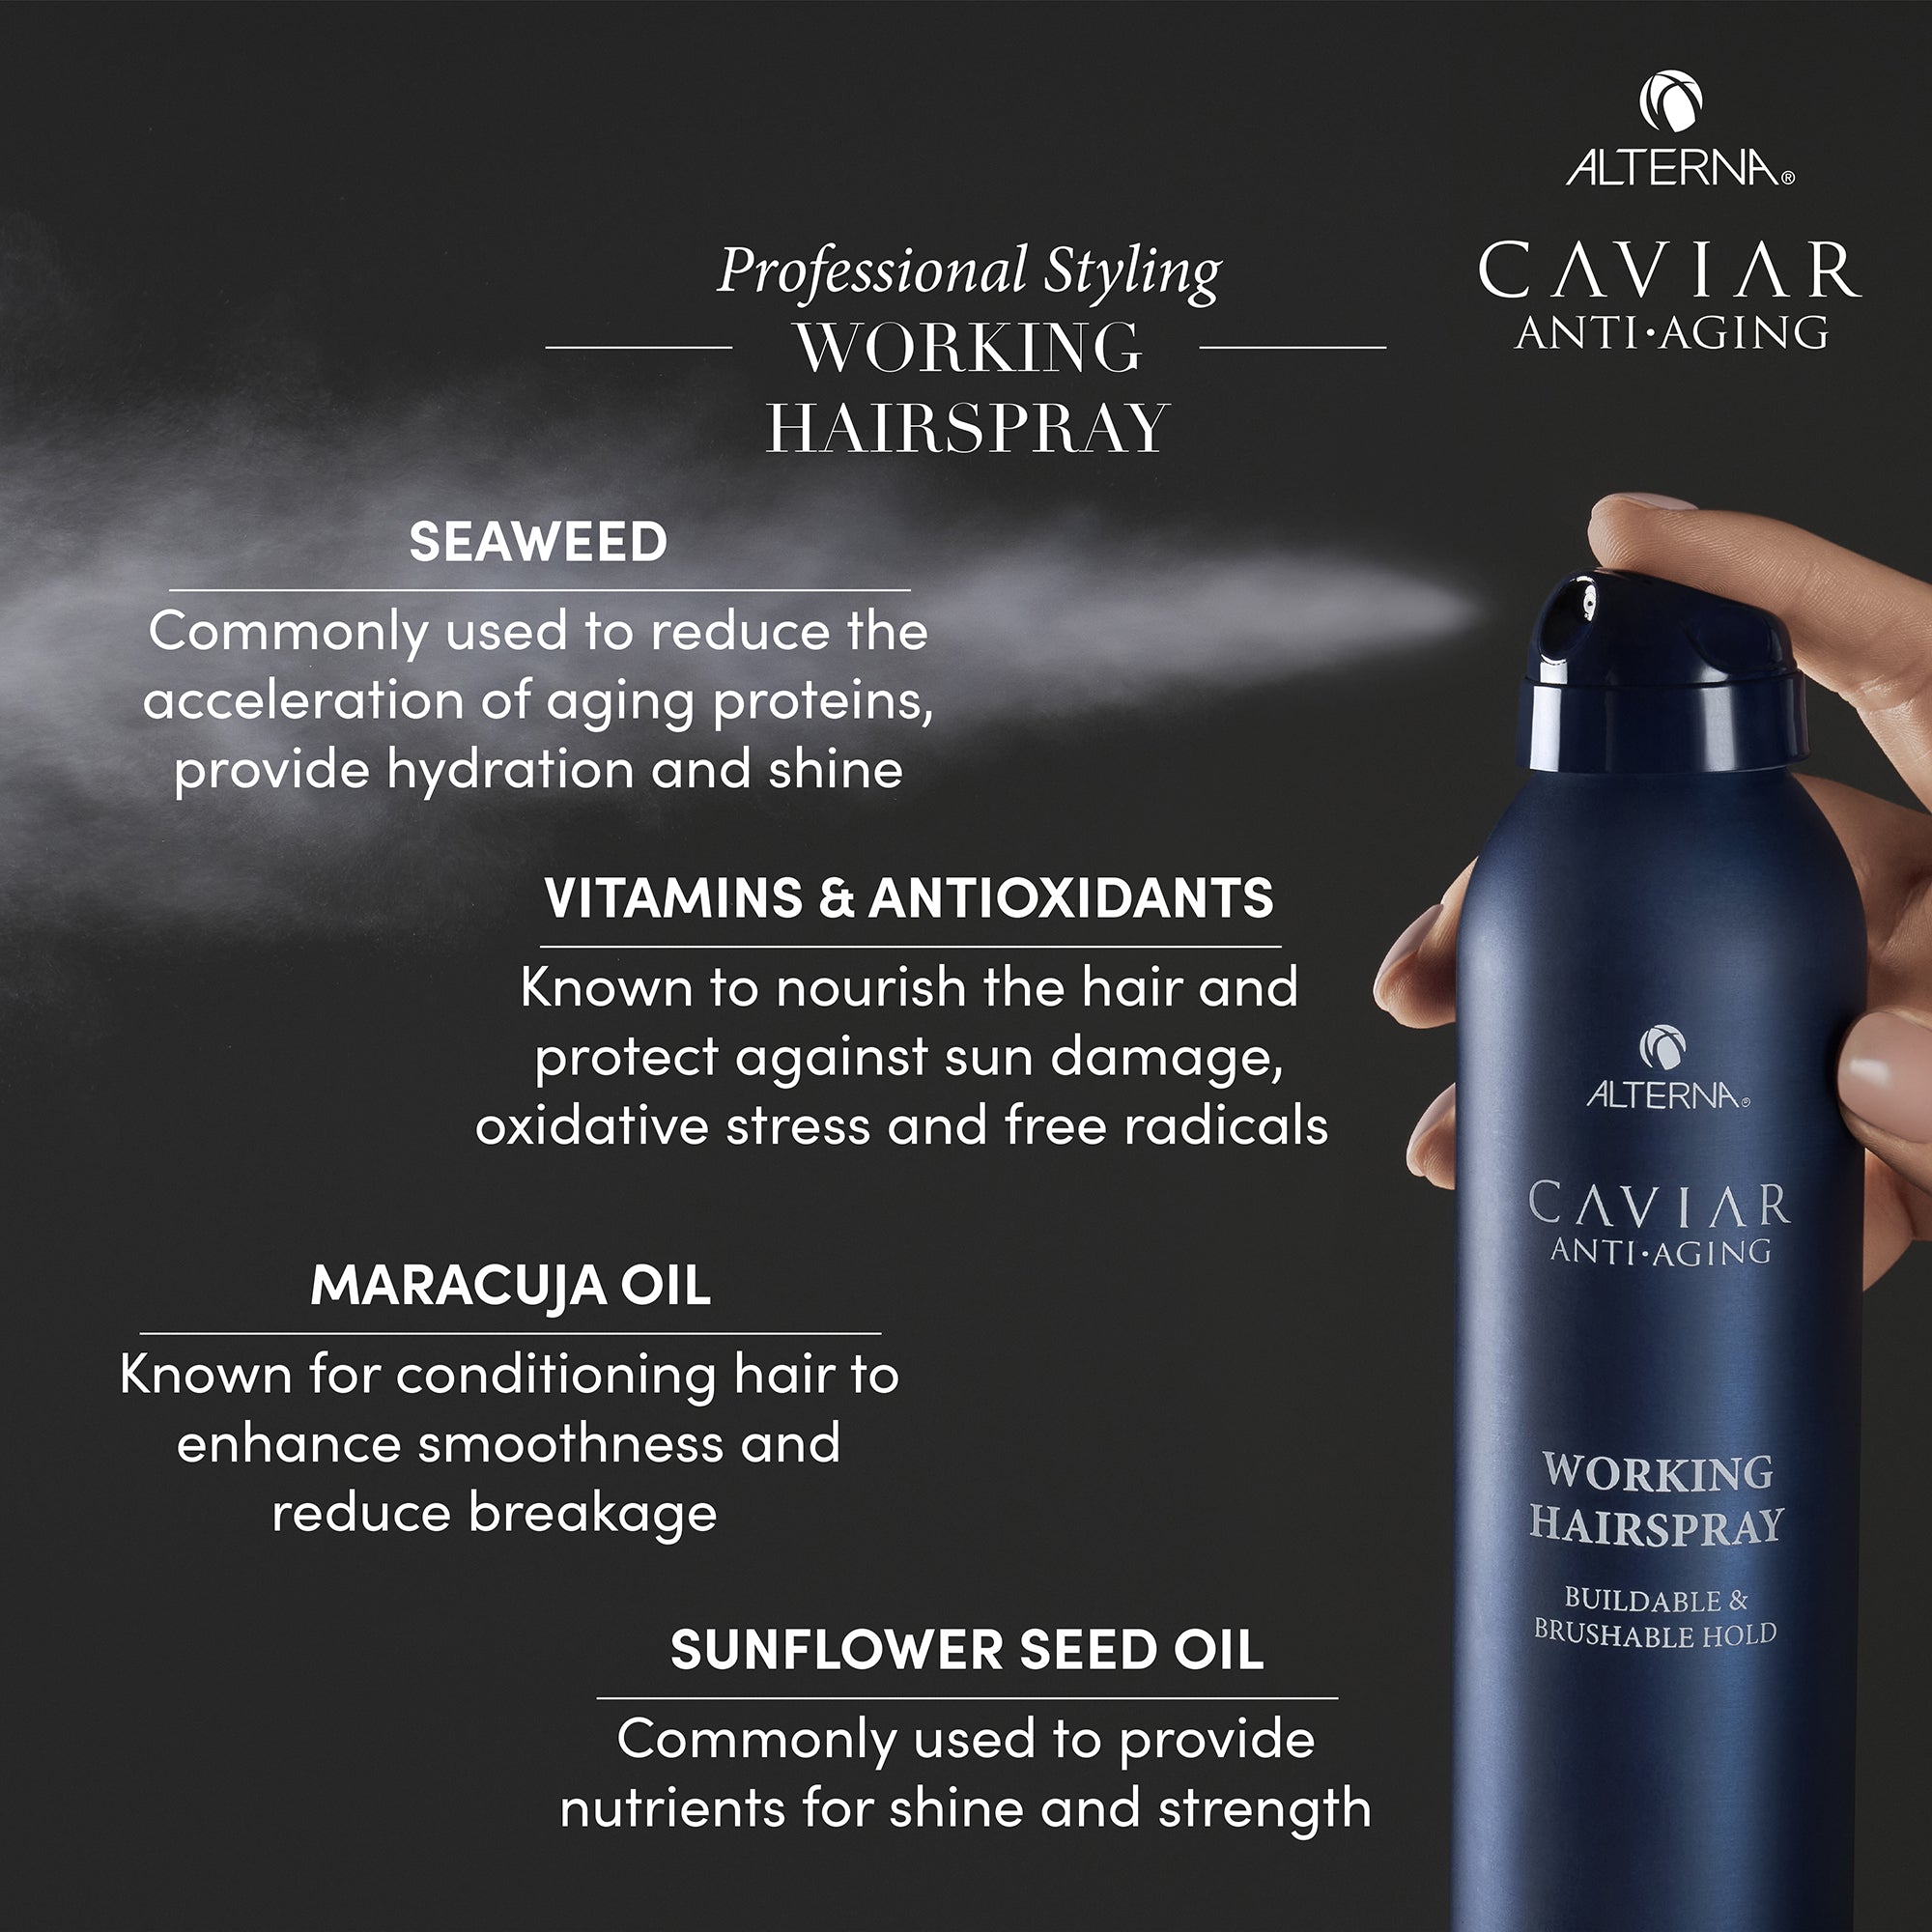 Alterna Caviar Anti-Aging Working Hair Spray / 7.4 oz